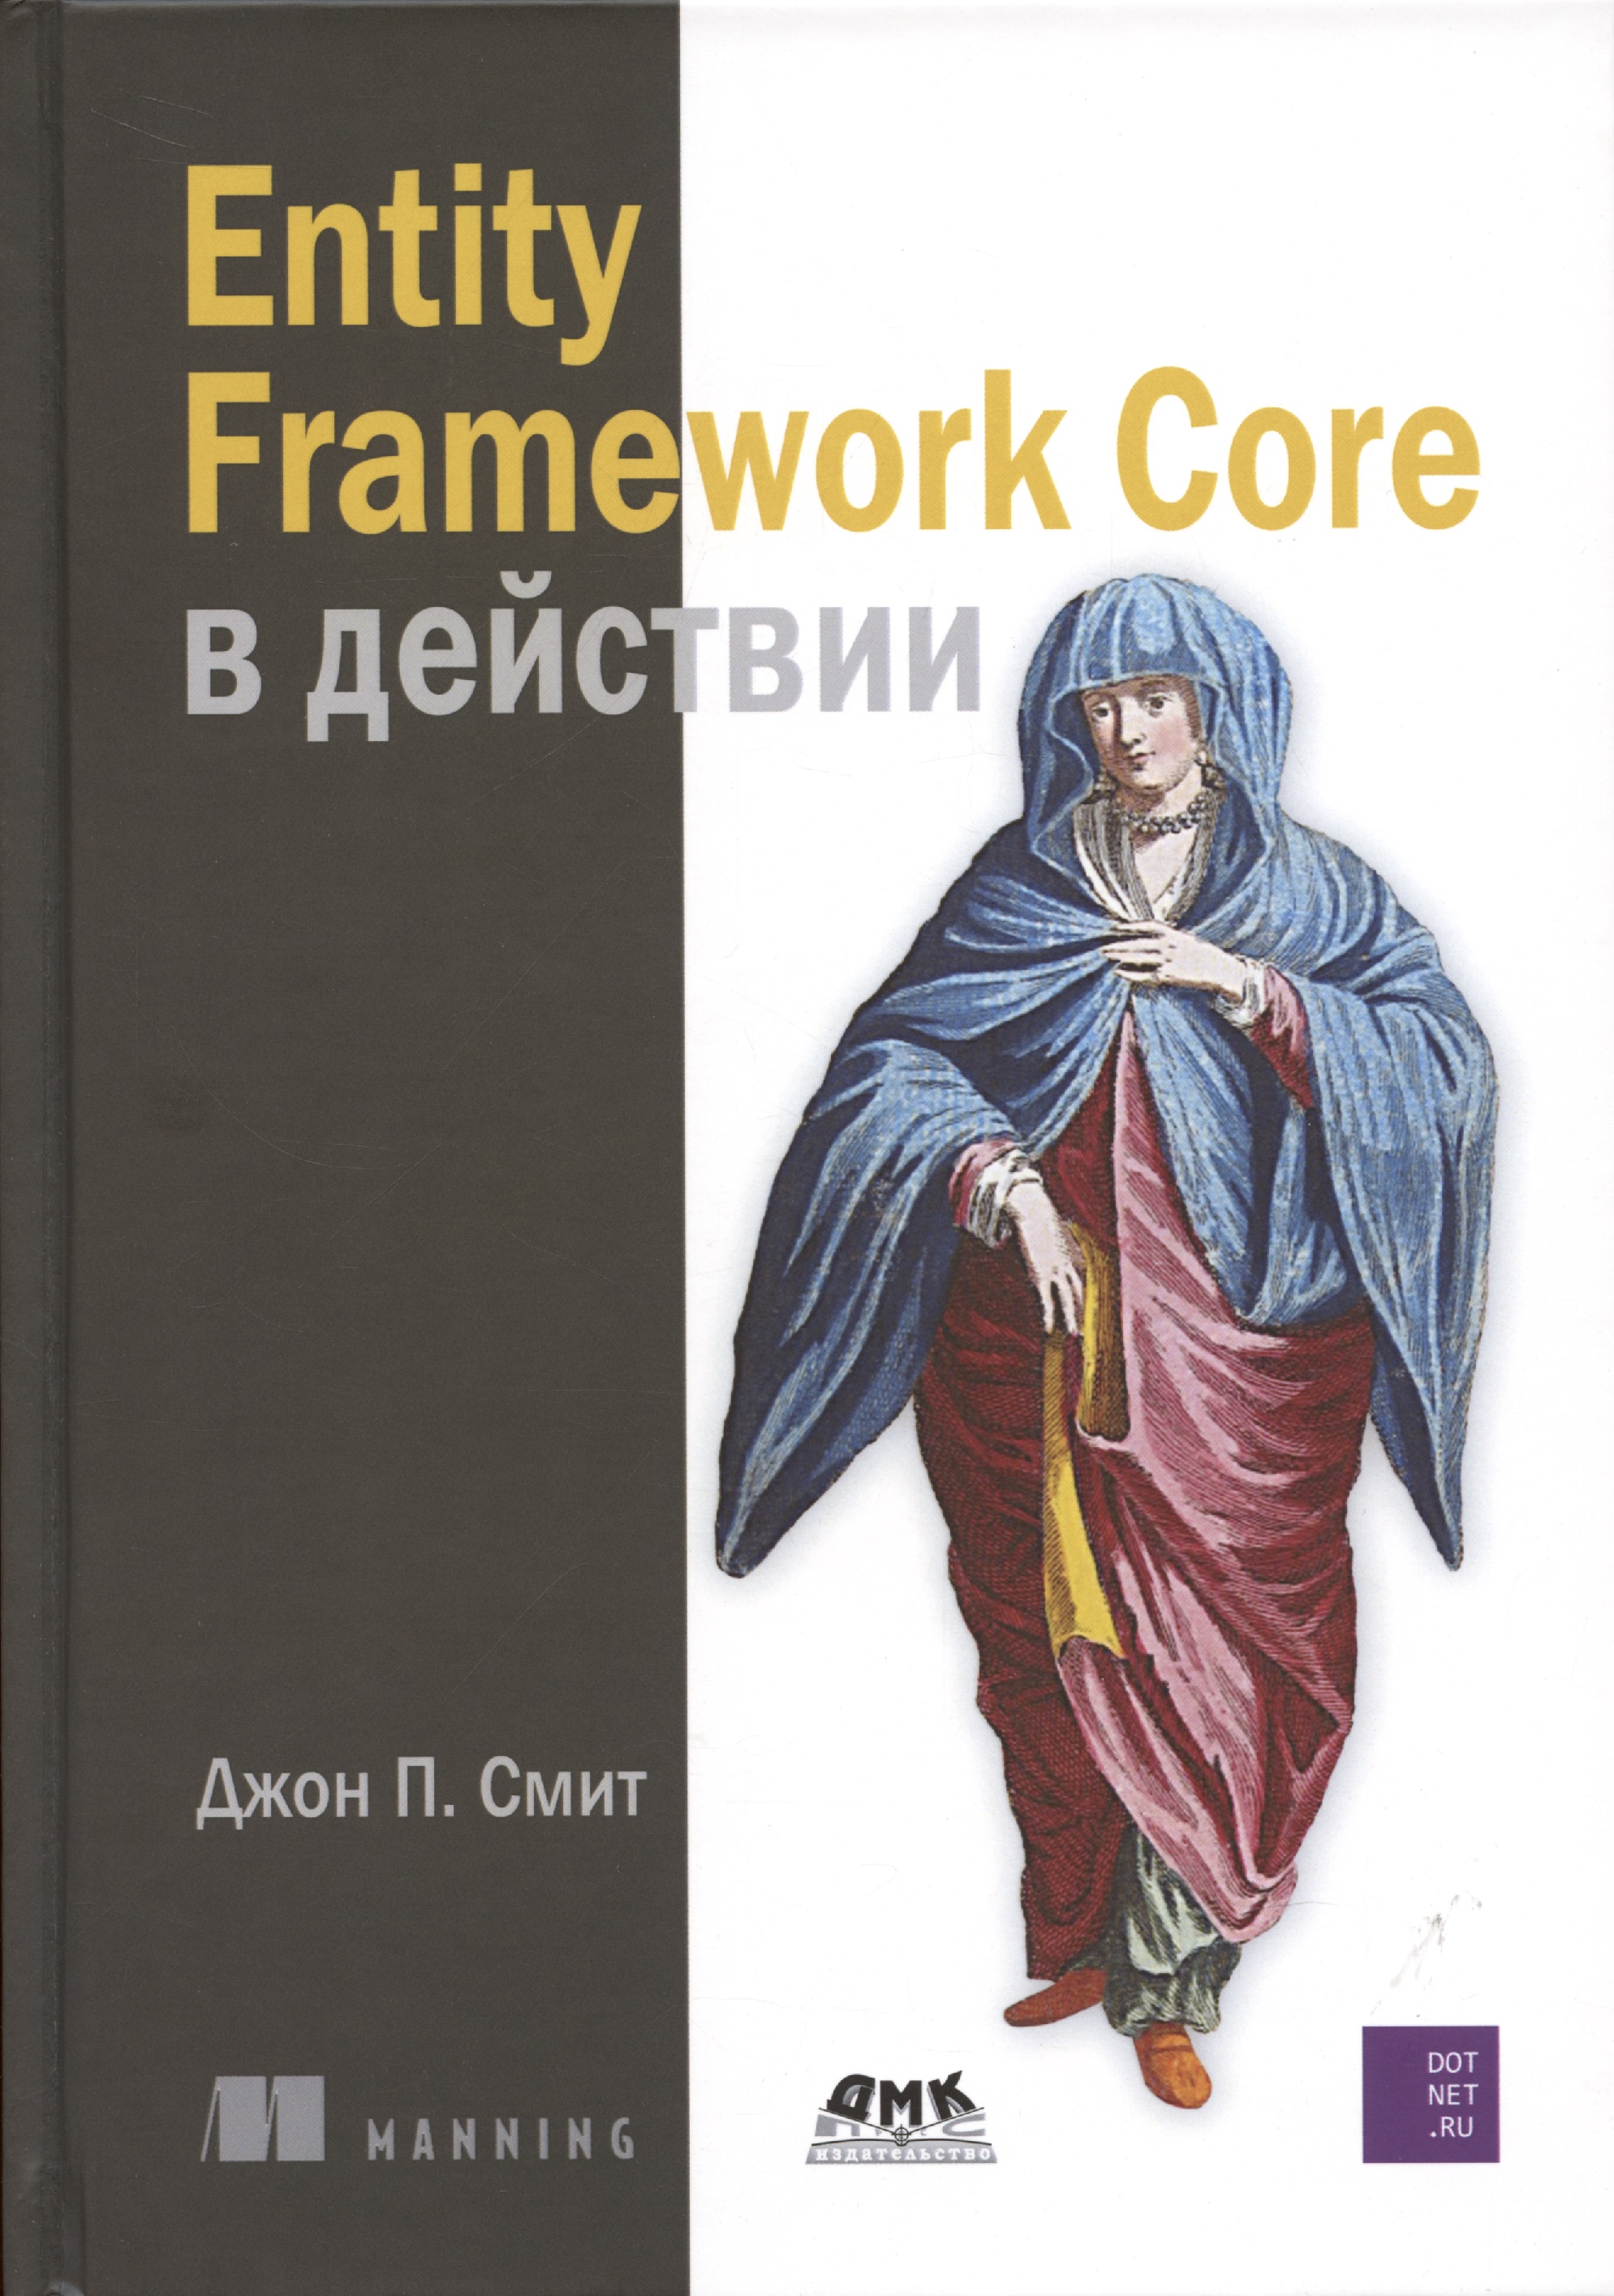 Entity Framework Core  